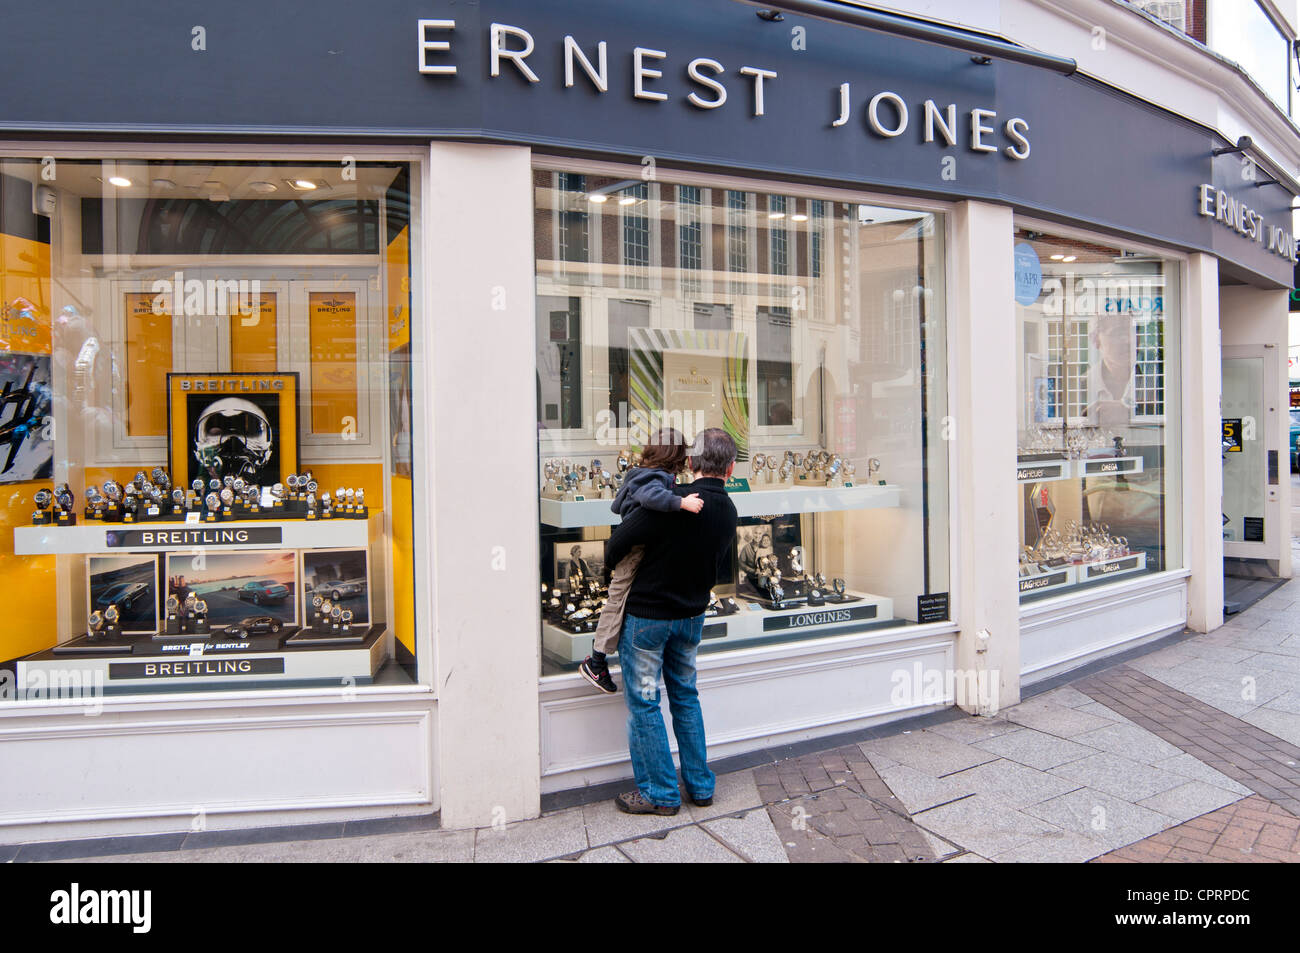 Ernest Jones jewellery shop in Kingston upon Thames, Surrey, UK Stock Photo